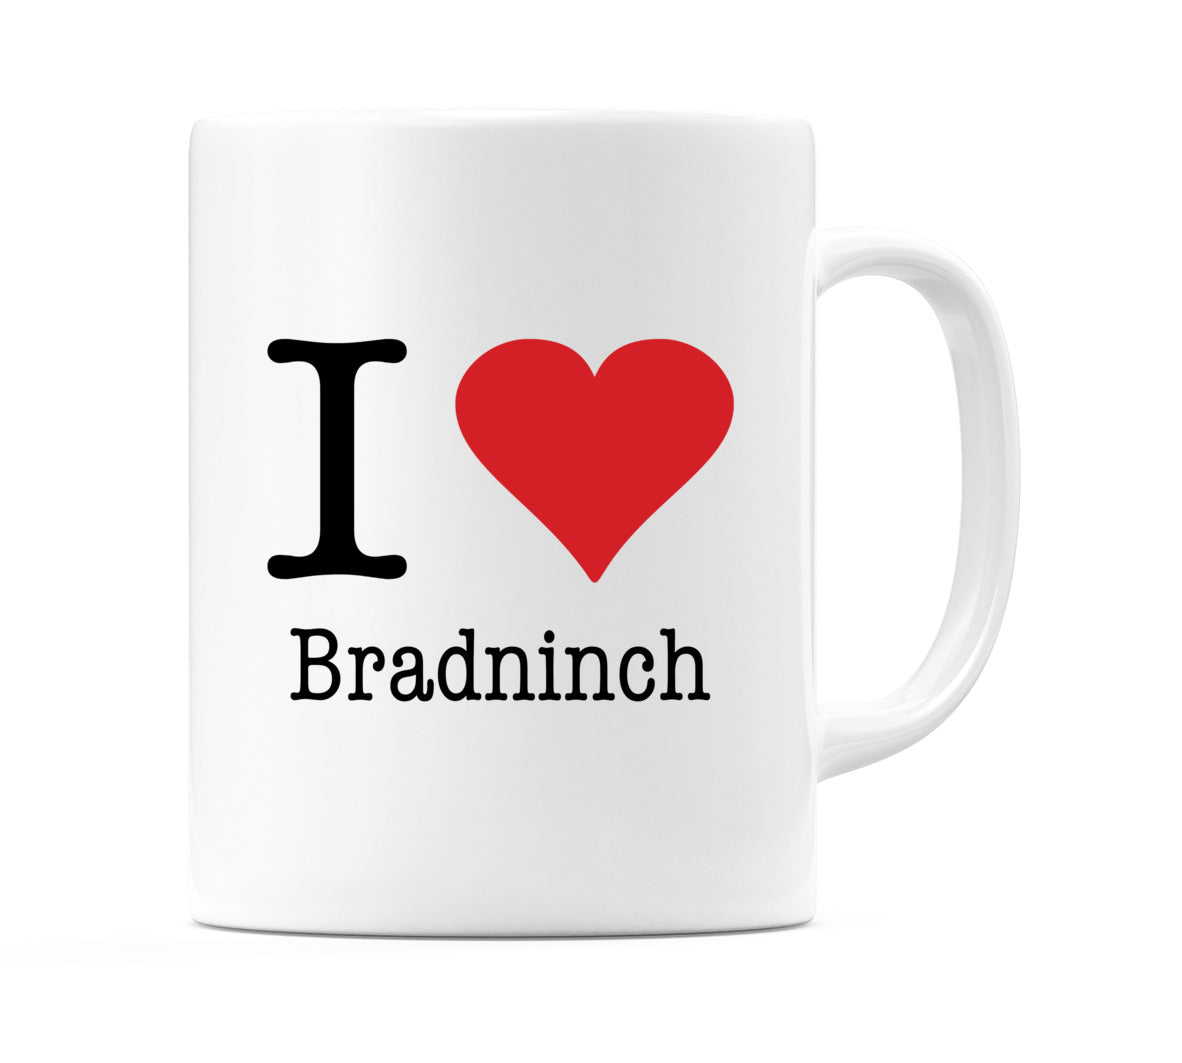 I Love Bradninch Mug